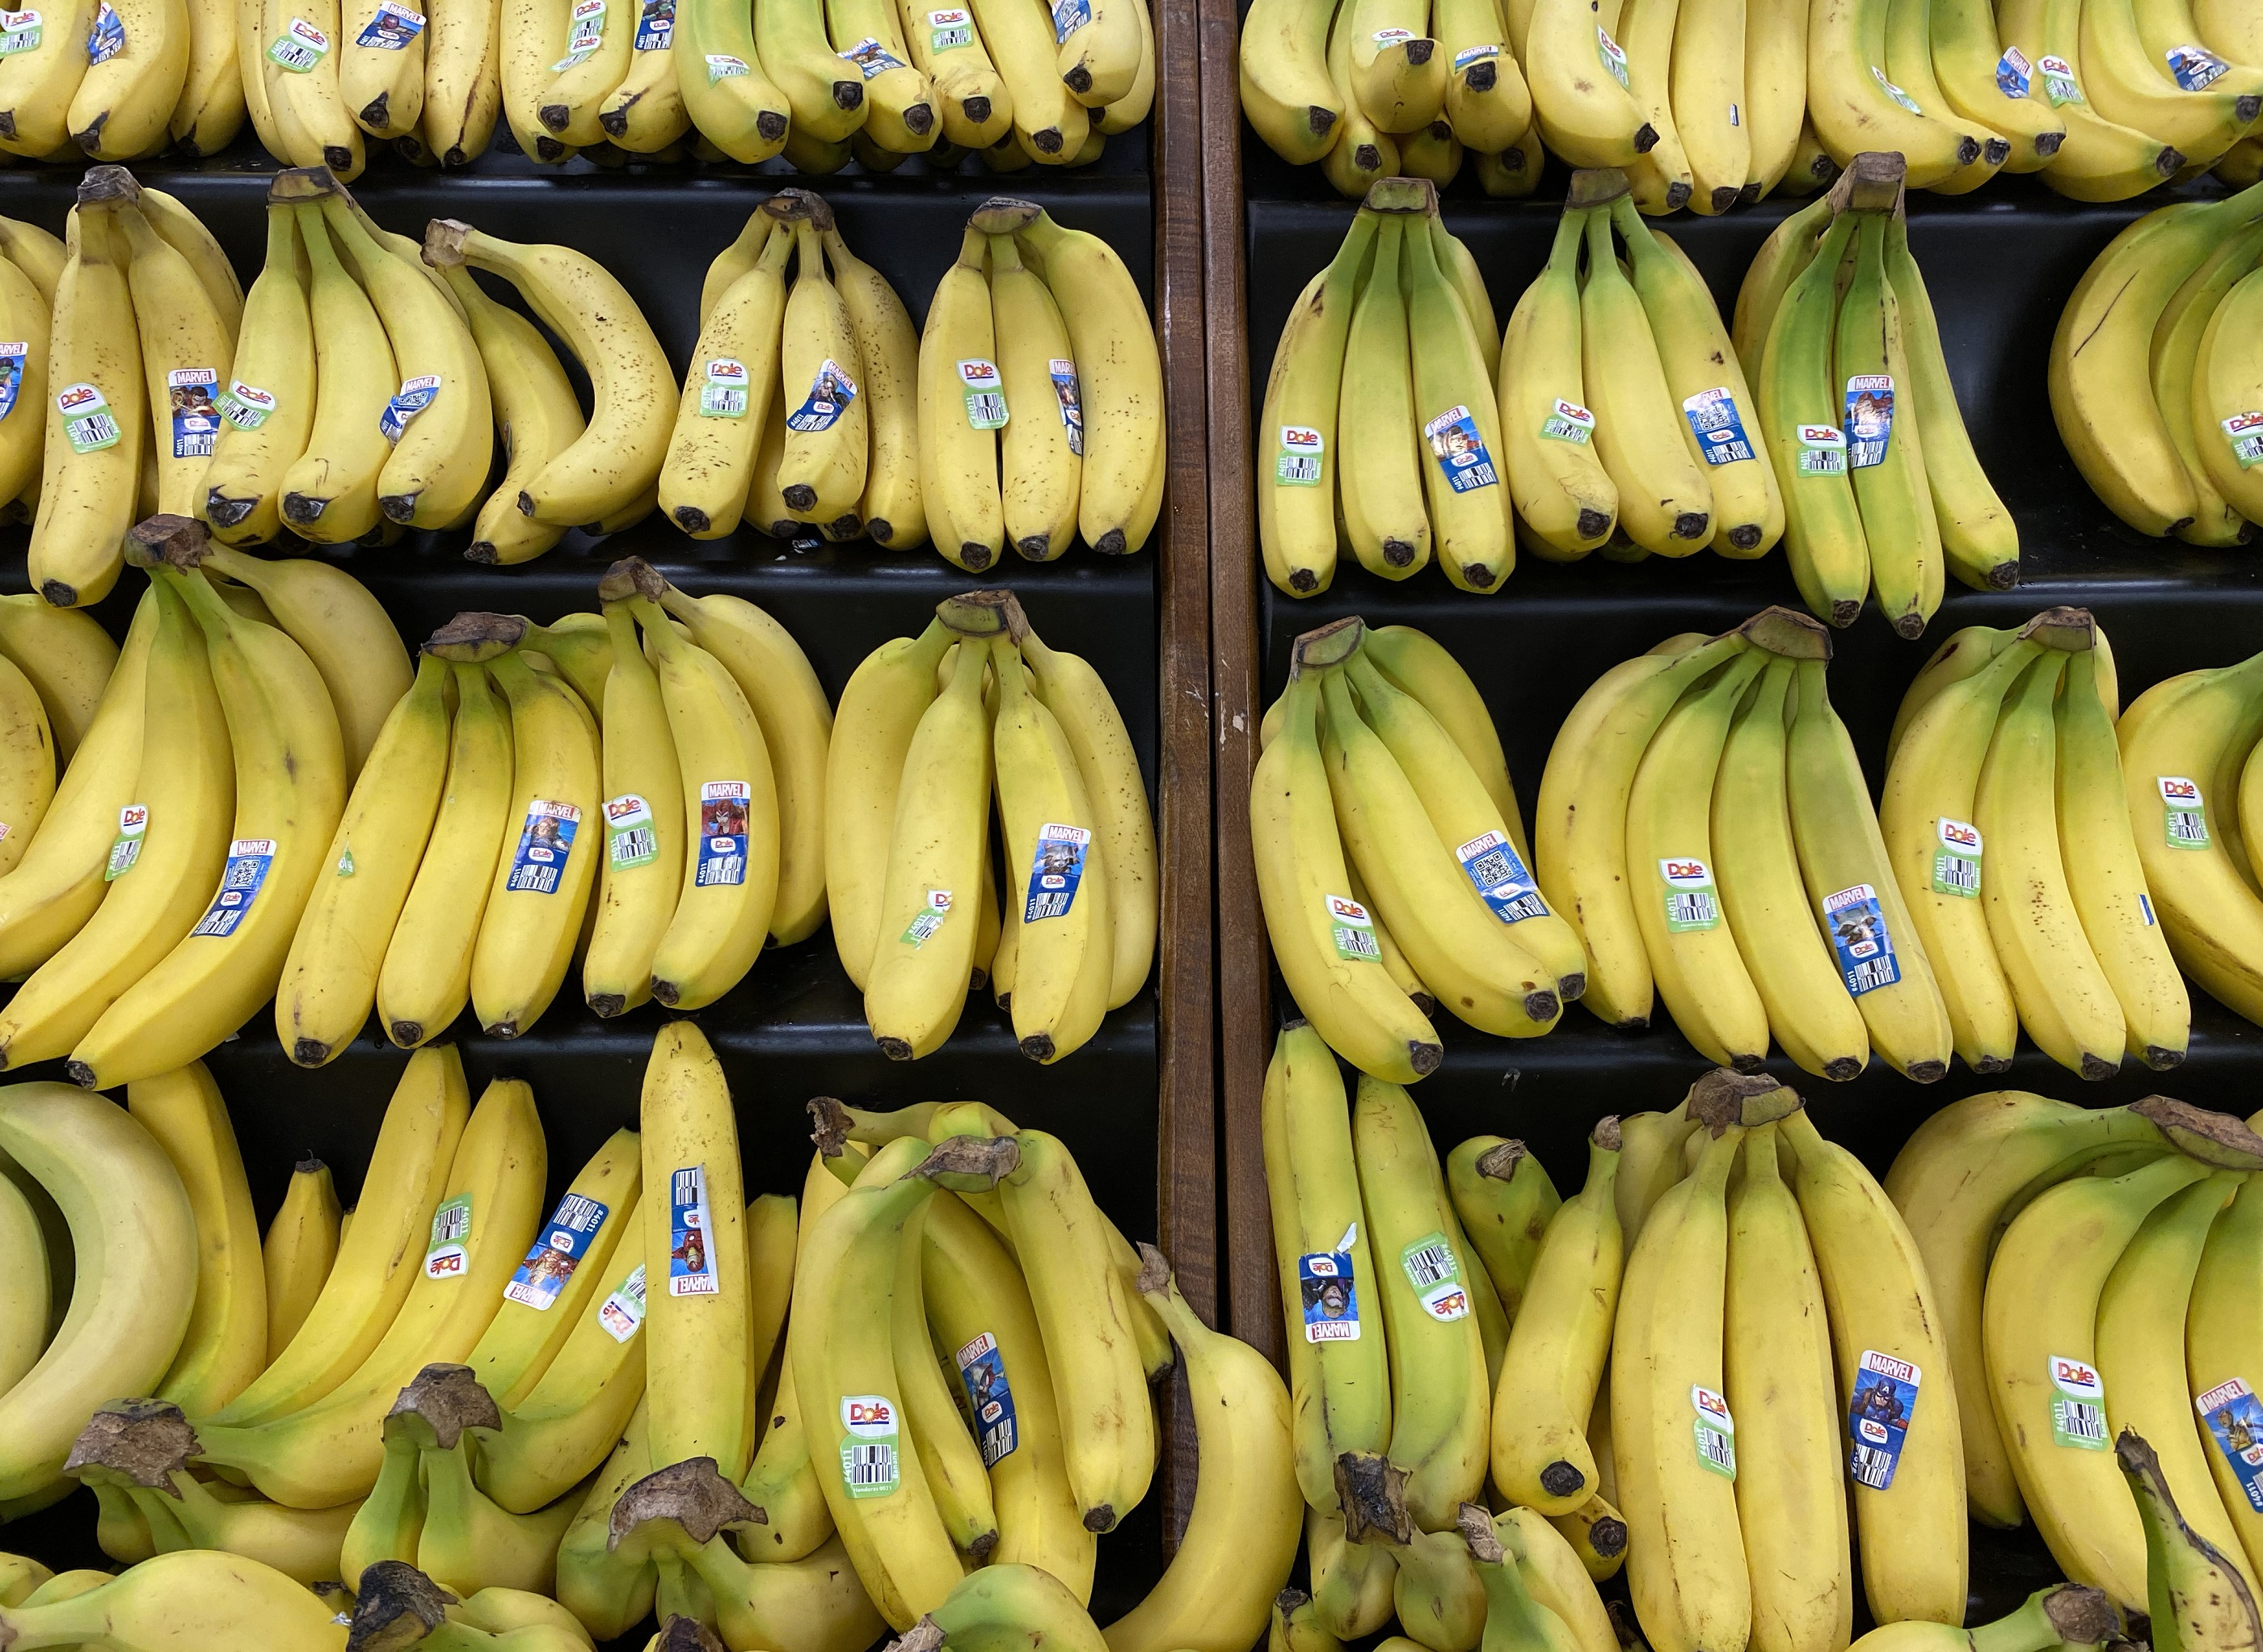 Why are bananas so cheap? - Marketplace